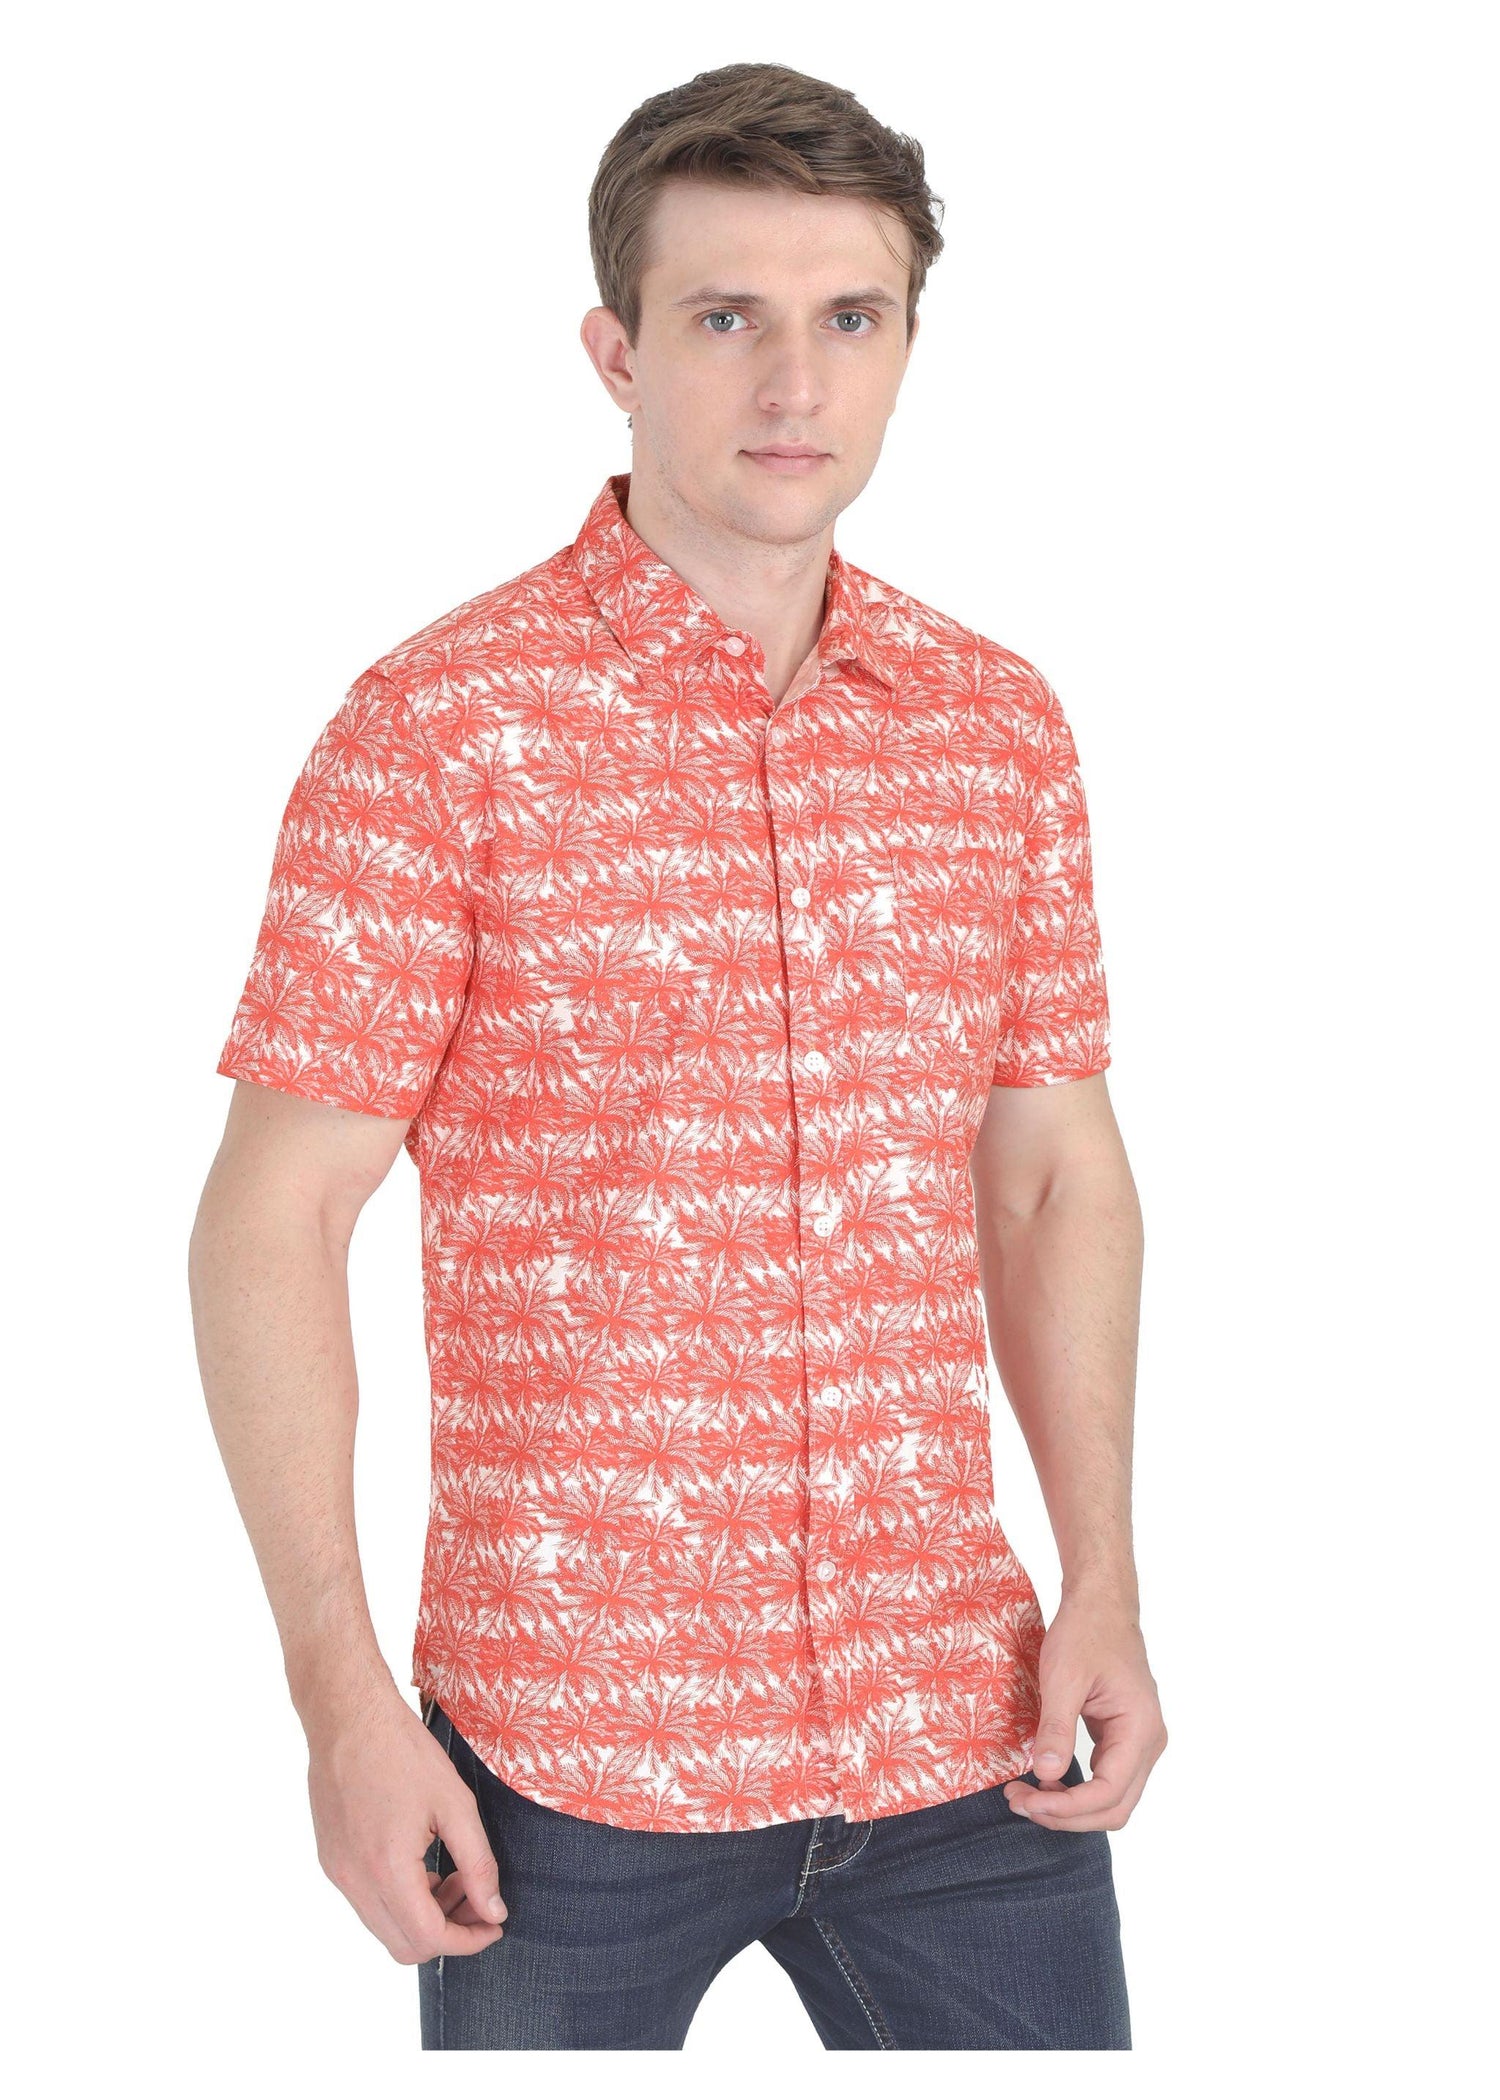 Tusok-orange-palmVacation-Printed Shirtimage-Orange Palm (6)